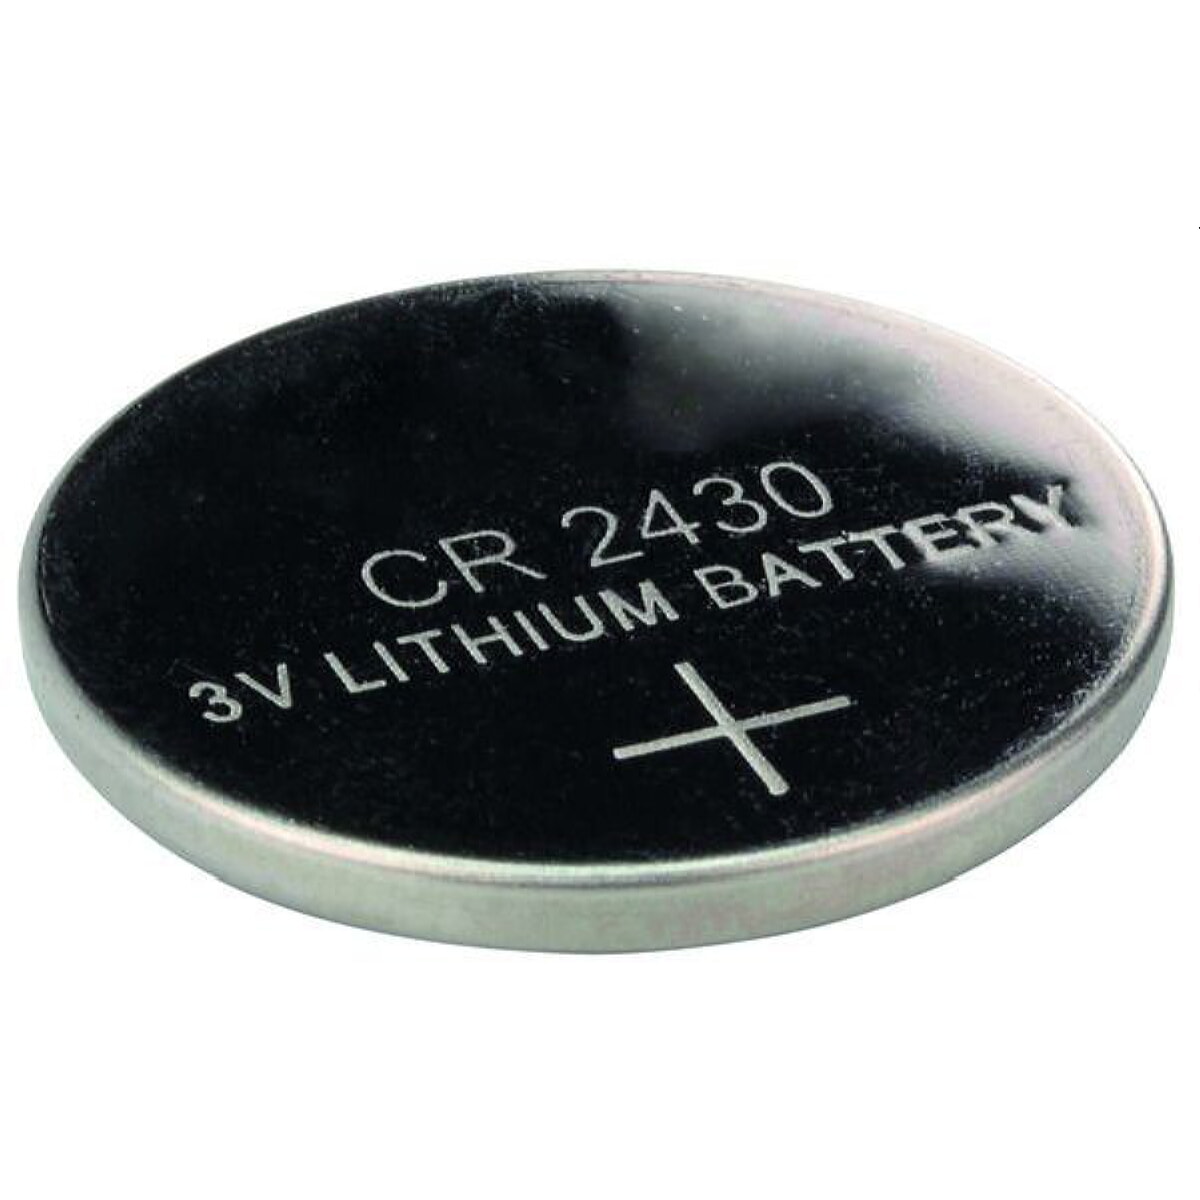 Protec.class Batterie PKZ30R CR2430 Lithium 3V 300mAh (MHD) 05105435